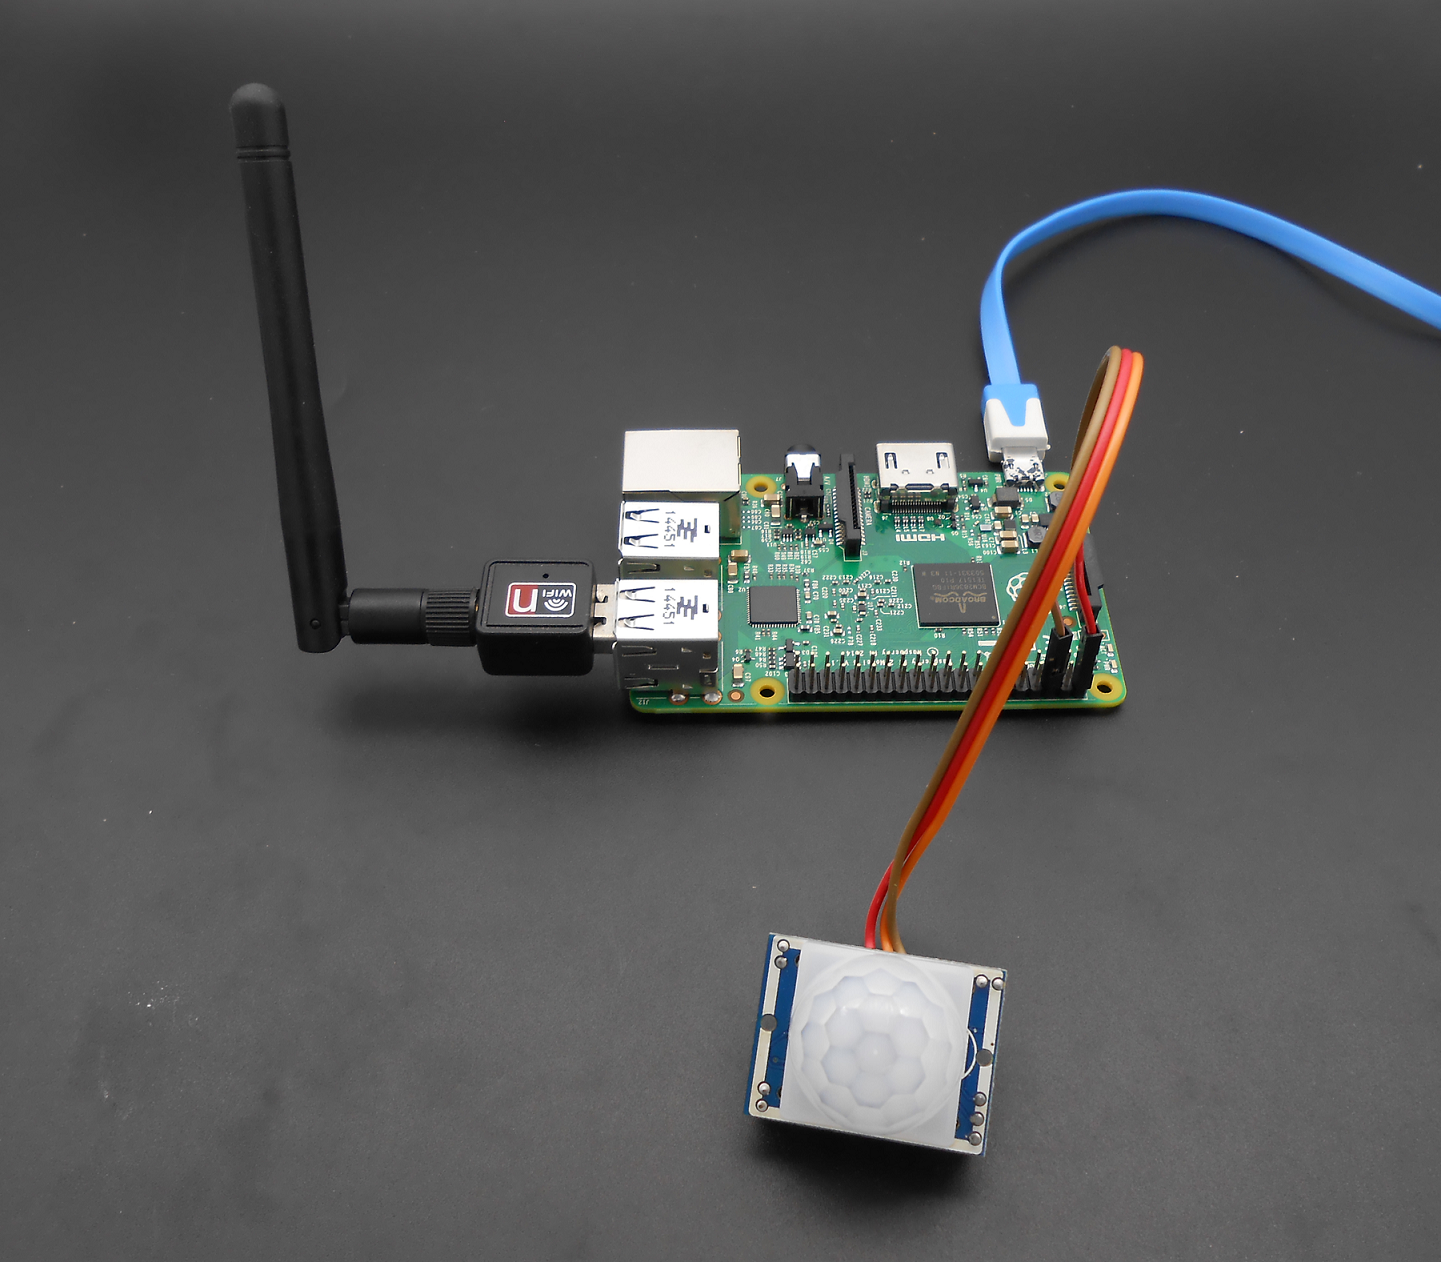 Adeept New Ultimate Starter Learning Kit for Raspberry Pi 3 2 Model B/B Python ADXL345 GPIO Cable DC Motor